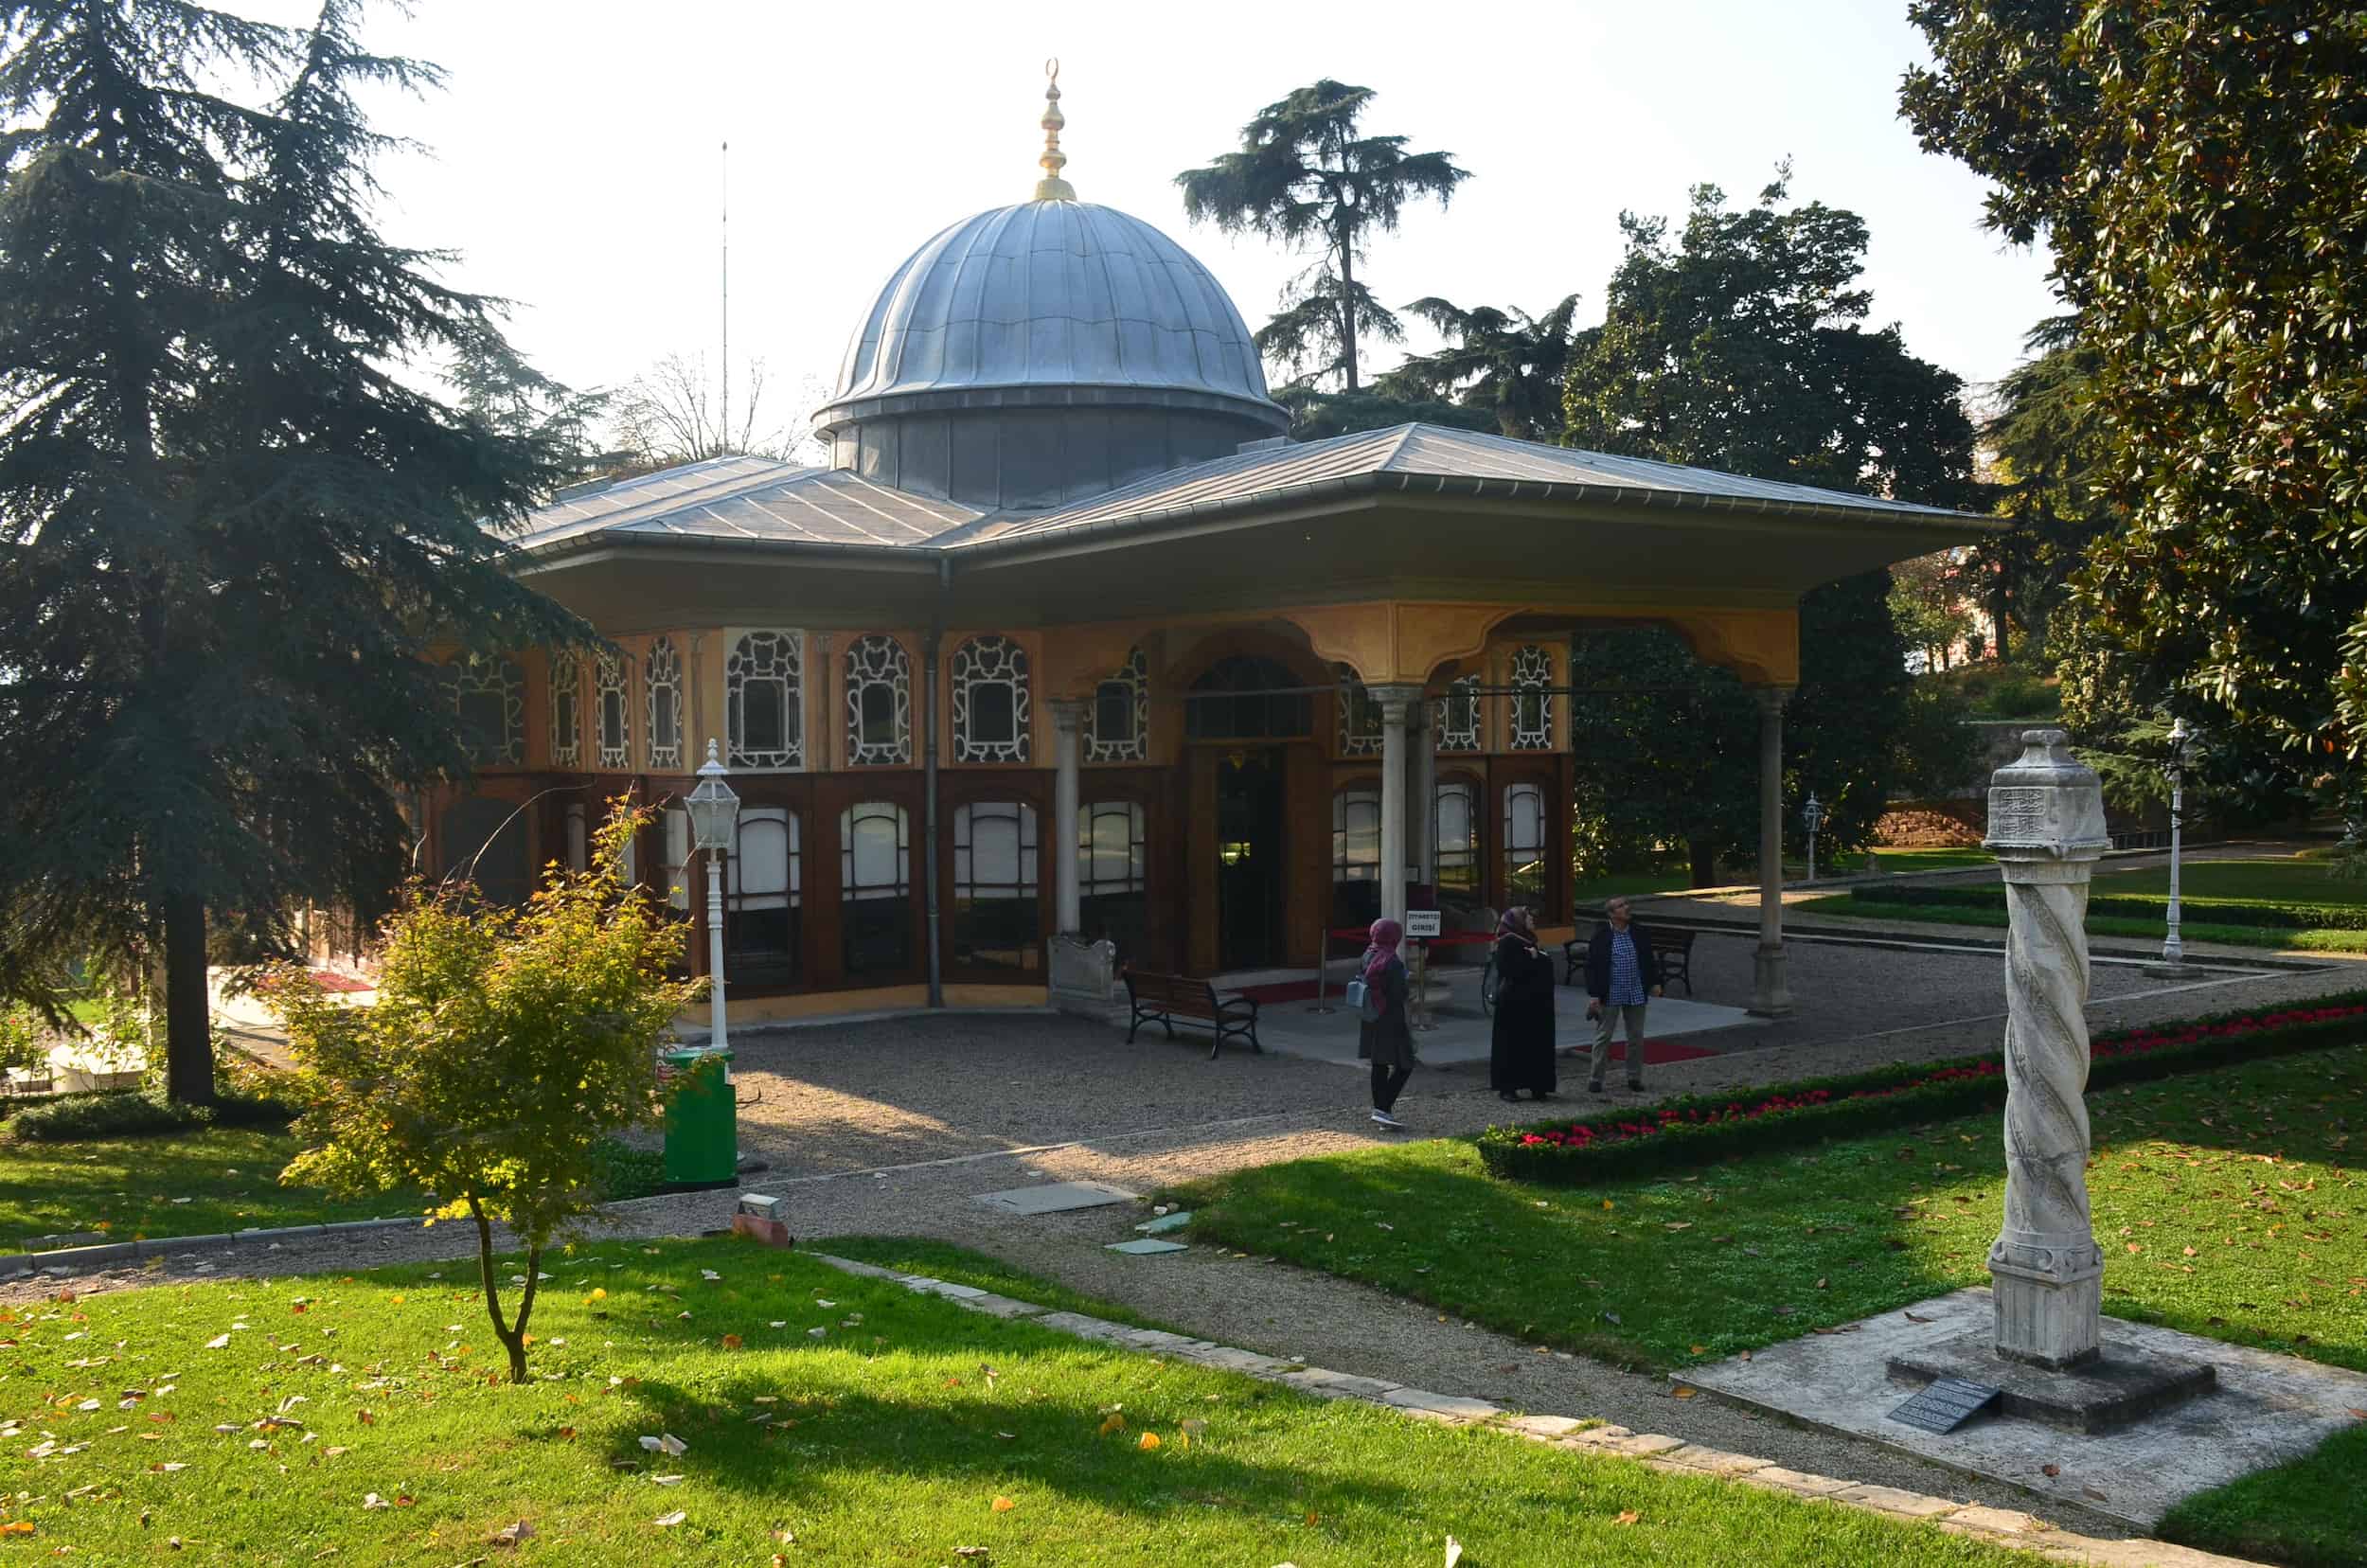 Aynalıkavak Pavilion in Hasköy, Istanbul, Turkey